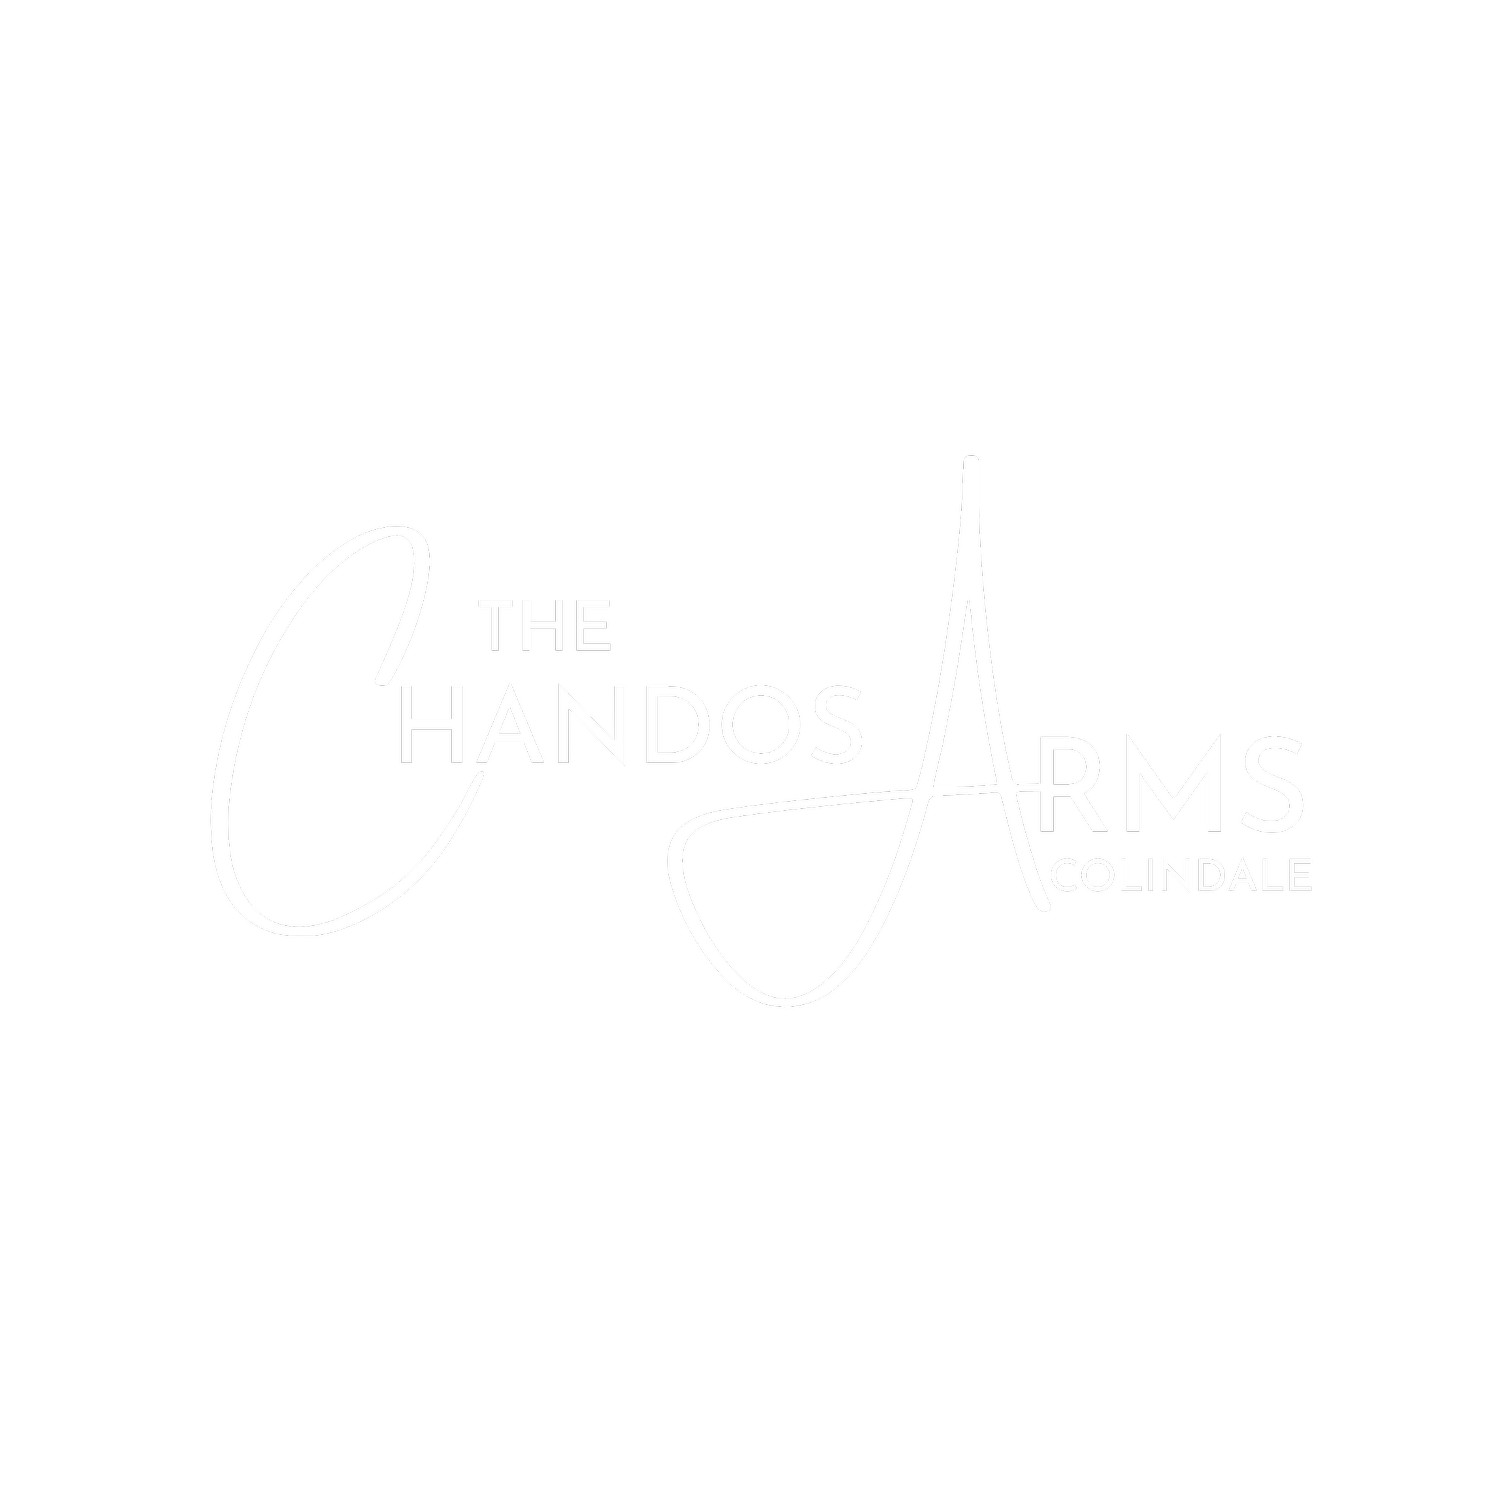 The Chandos Arms 